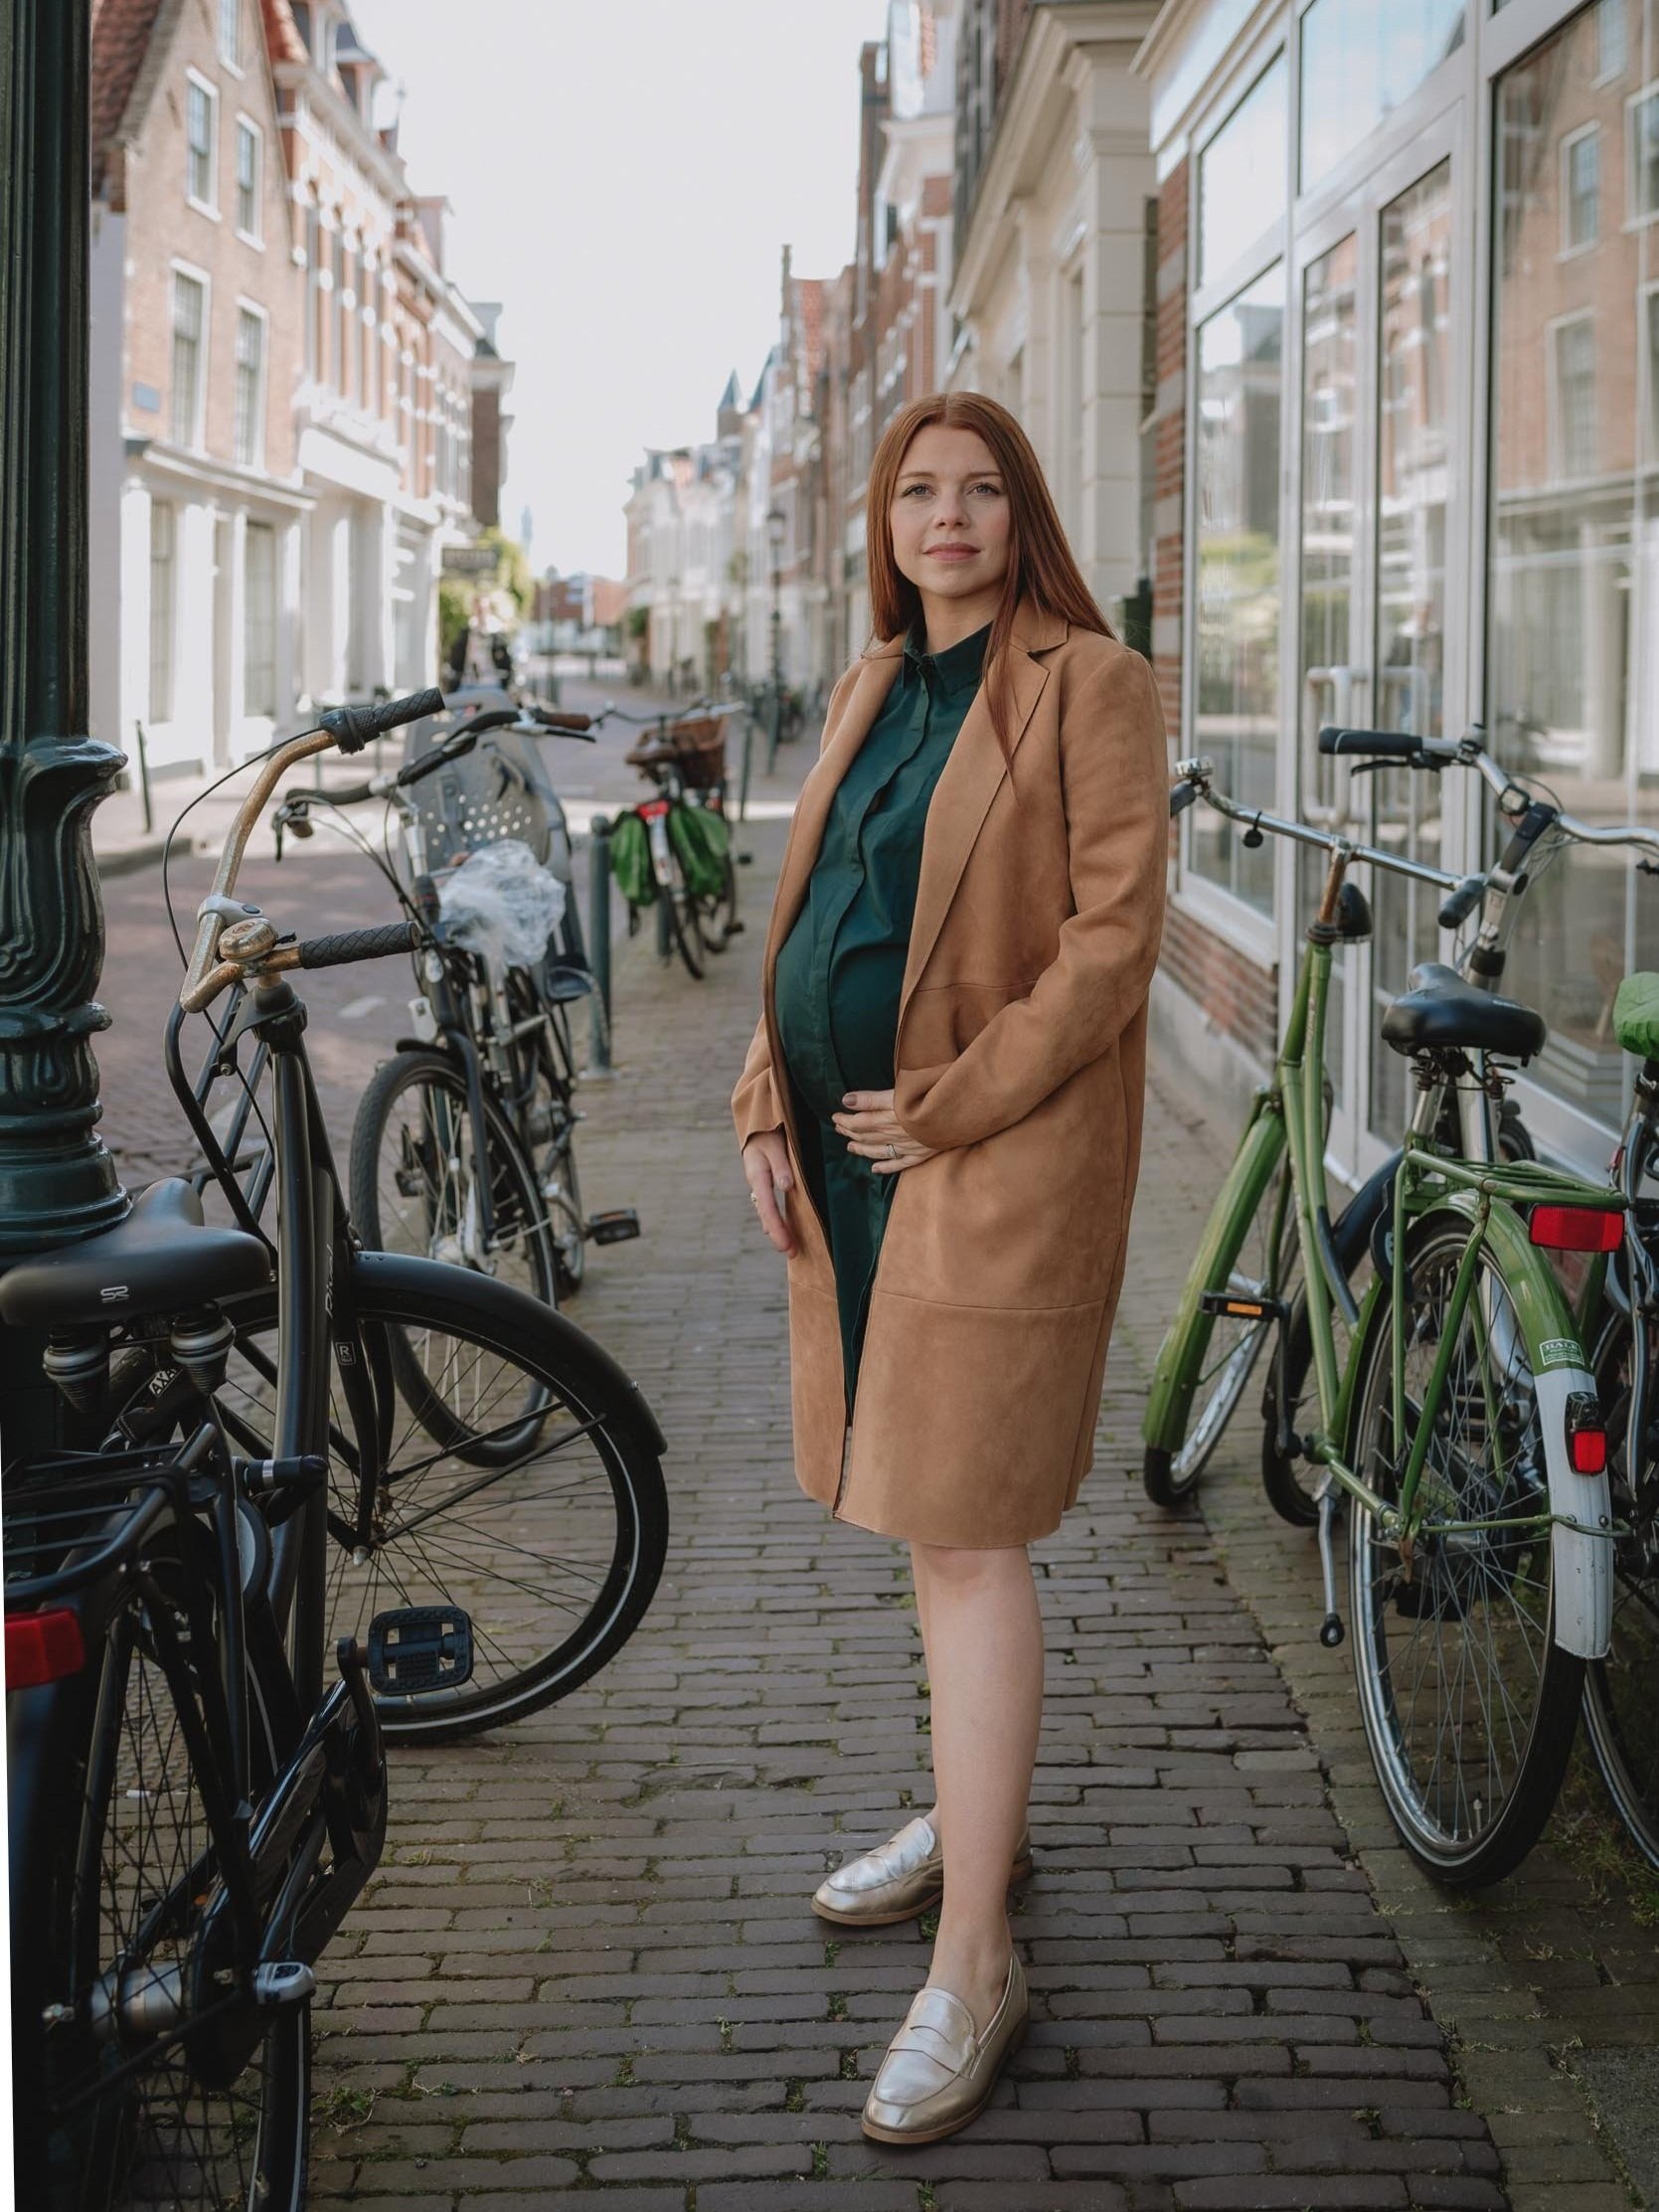 Pregnancy Photoshoot in Haarlem 3